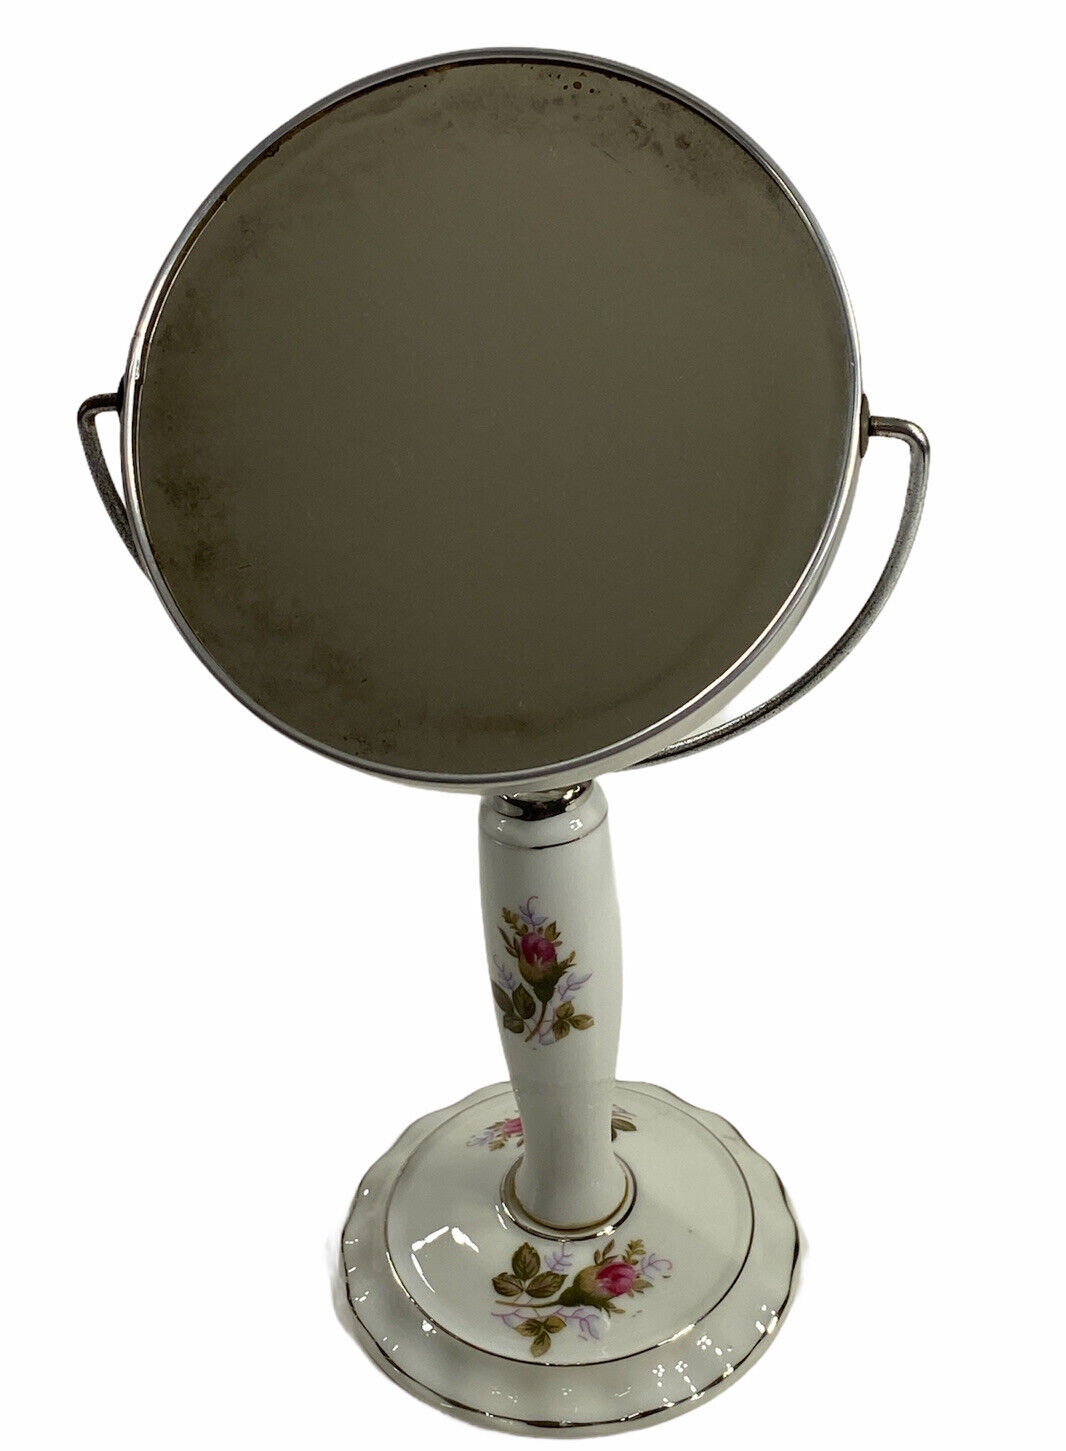 VTG Moss Rose Vanity Magnified Mirror Porcelain Floral Tabletop 2 Sides Rotates